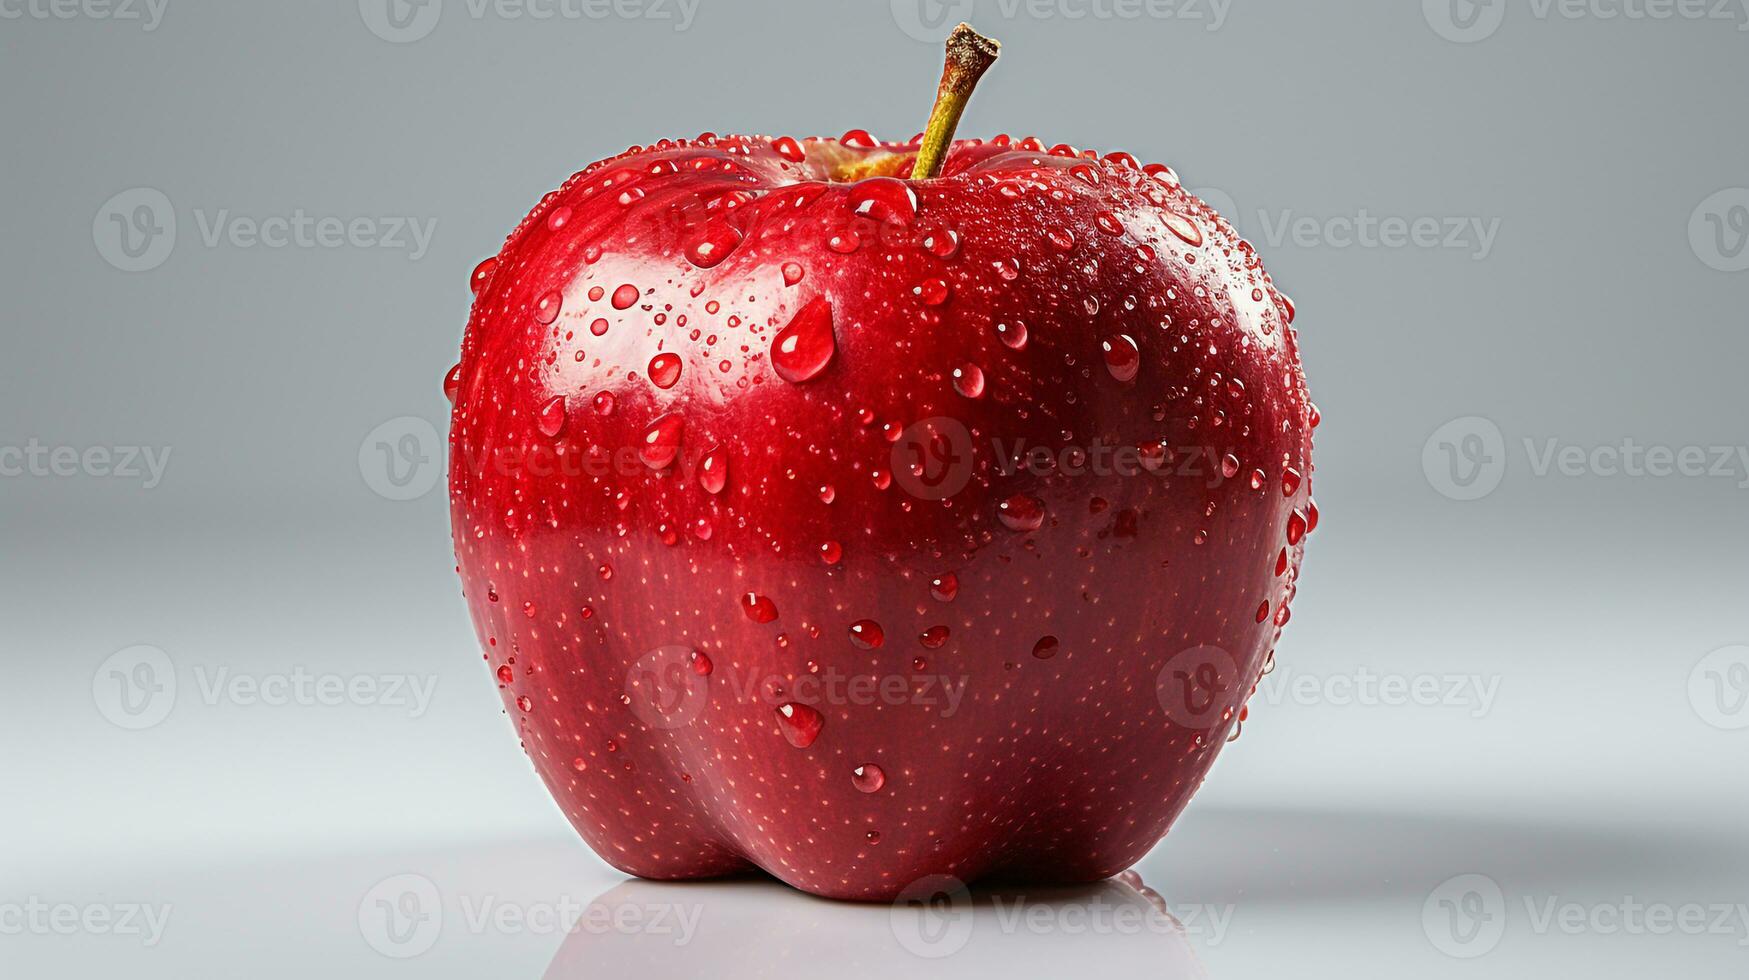 mele rosse fresche su sfondo bianco foto